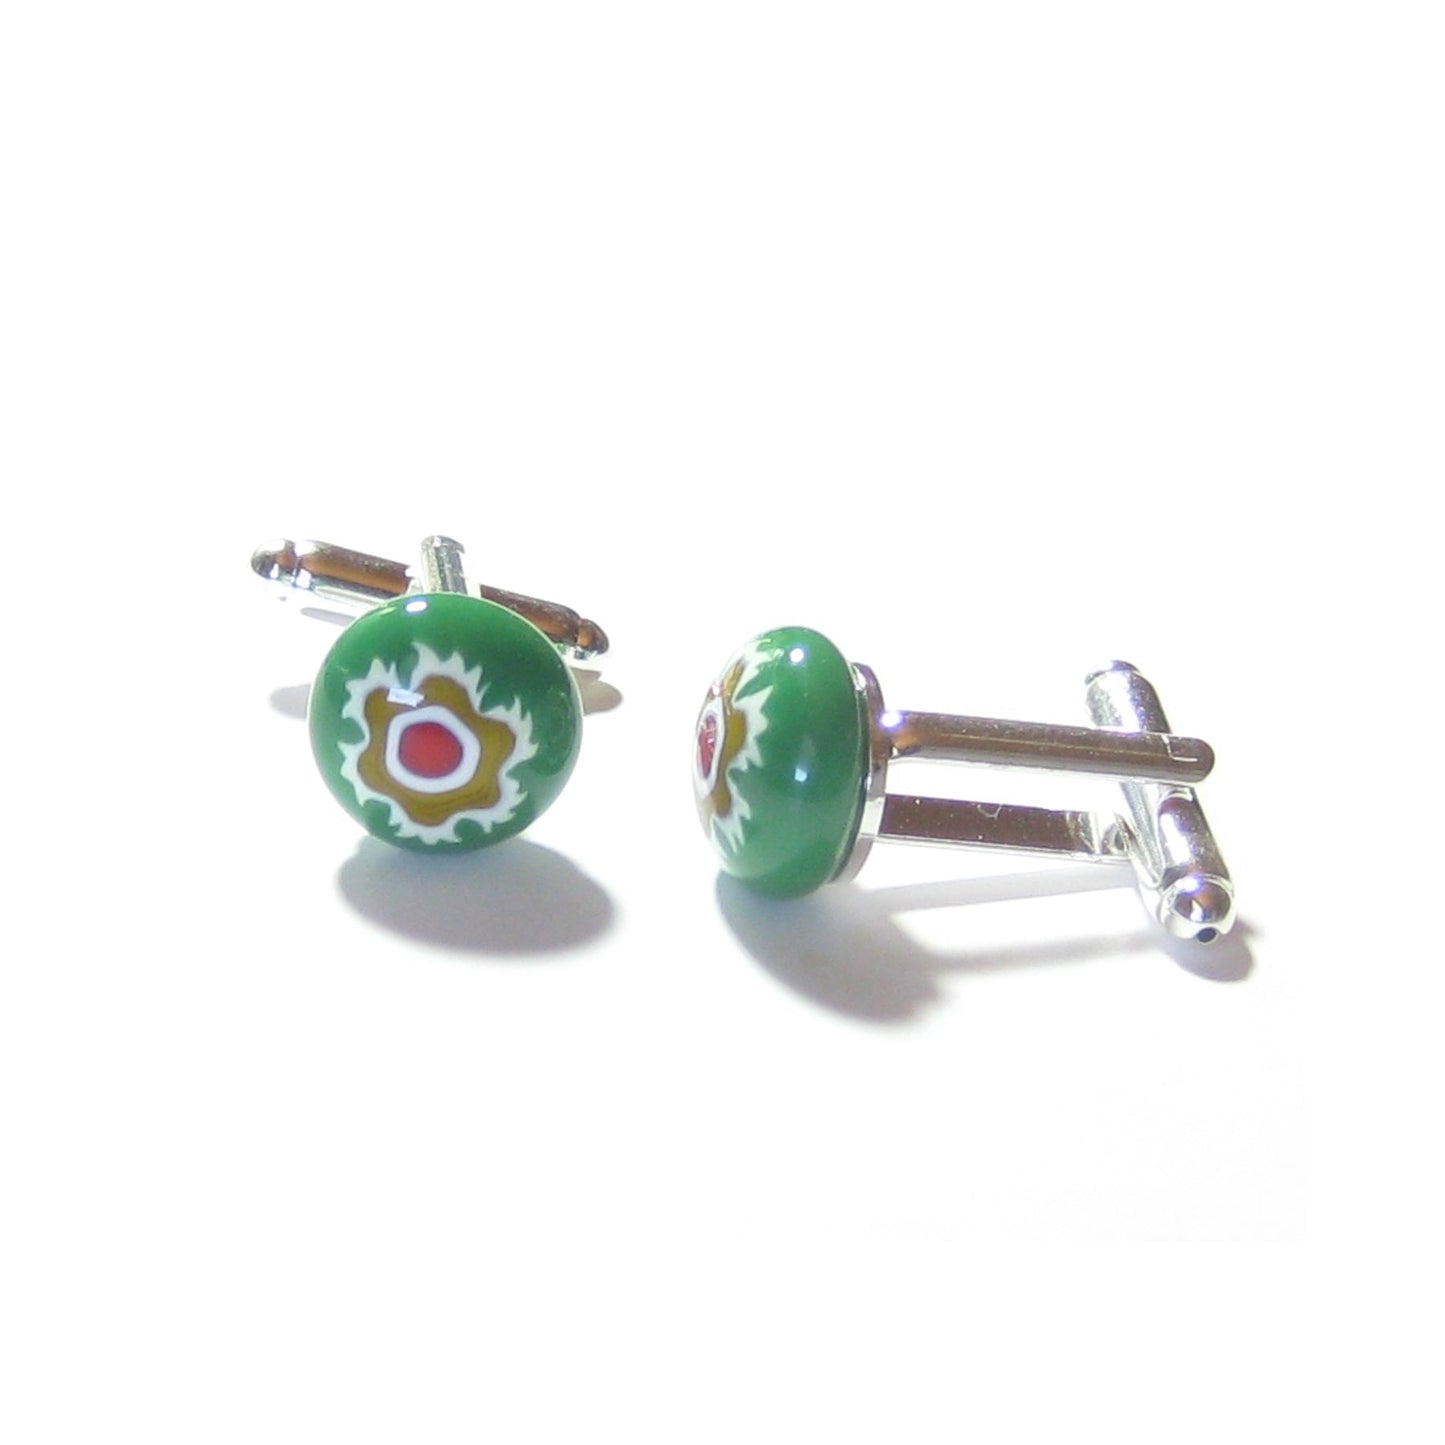 Colorful Green Murano Glass Millefiori Cuff Links, Italian Glass Jewelry - JKC Murano